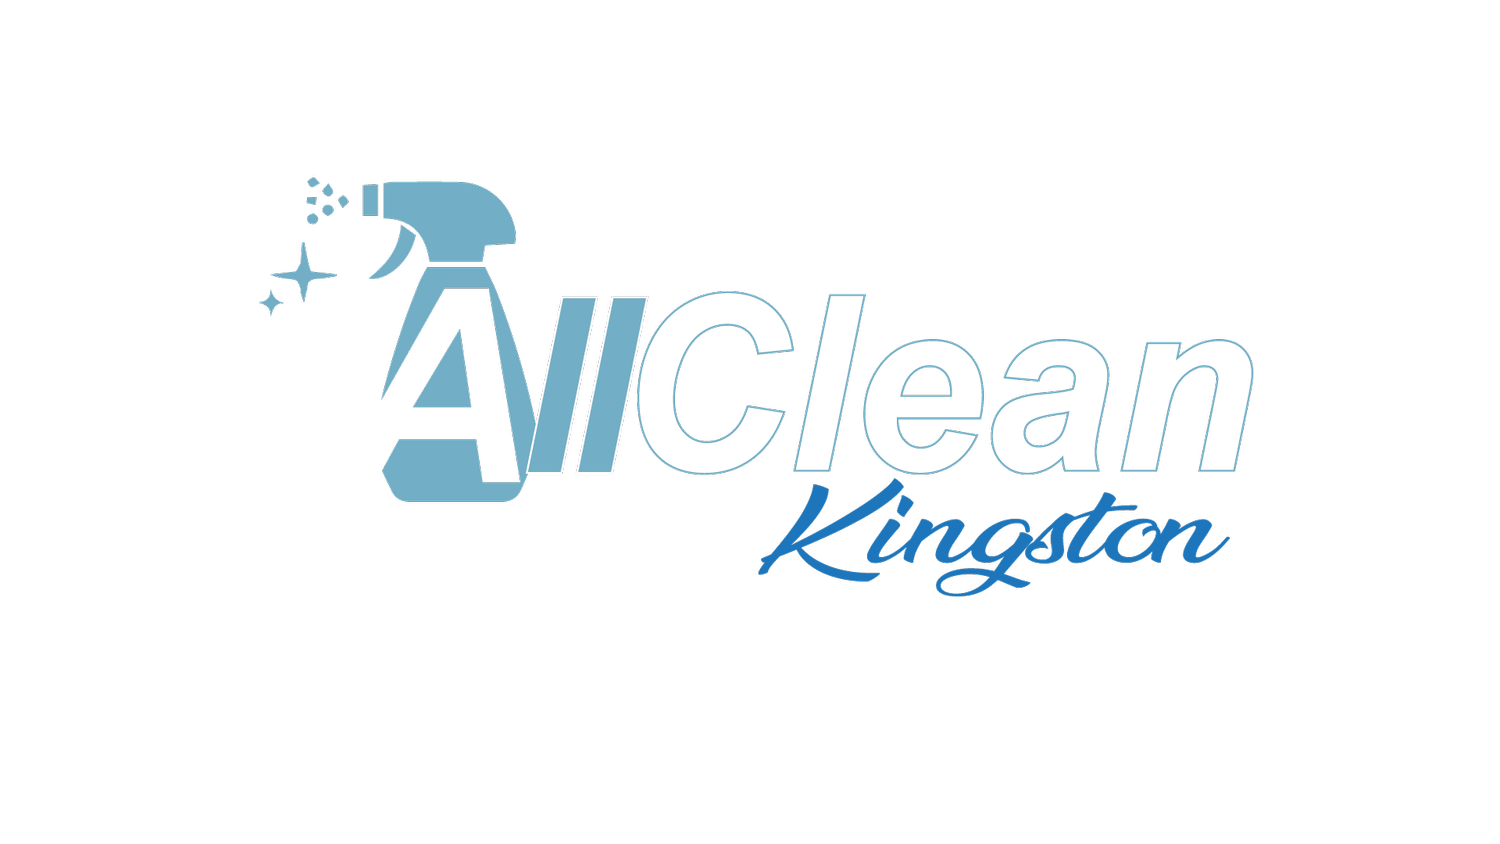 All Clean Kingston